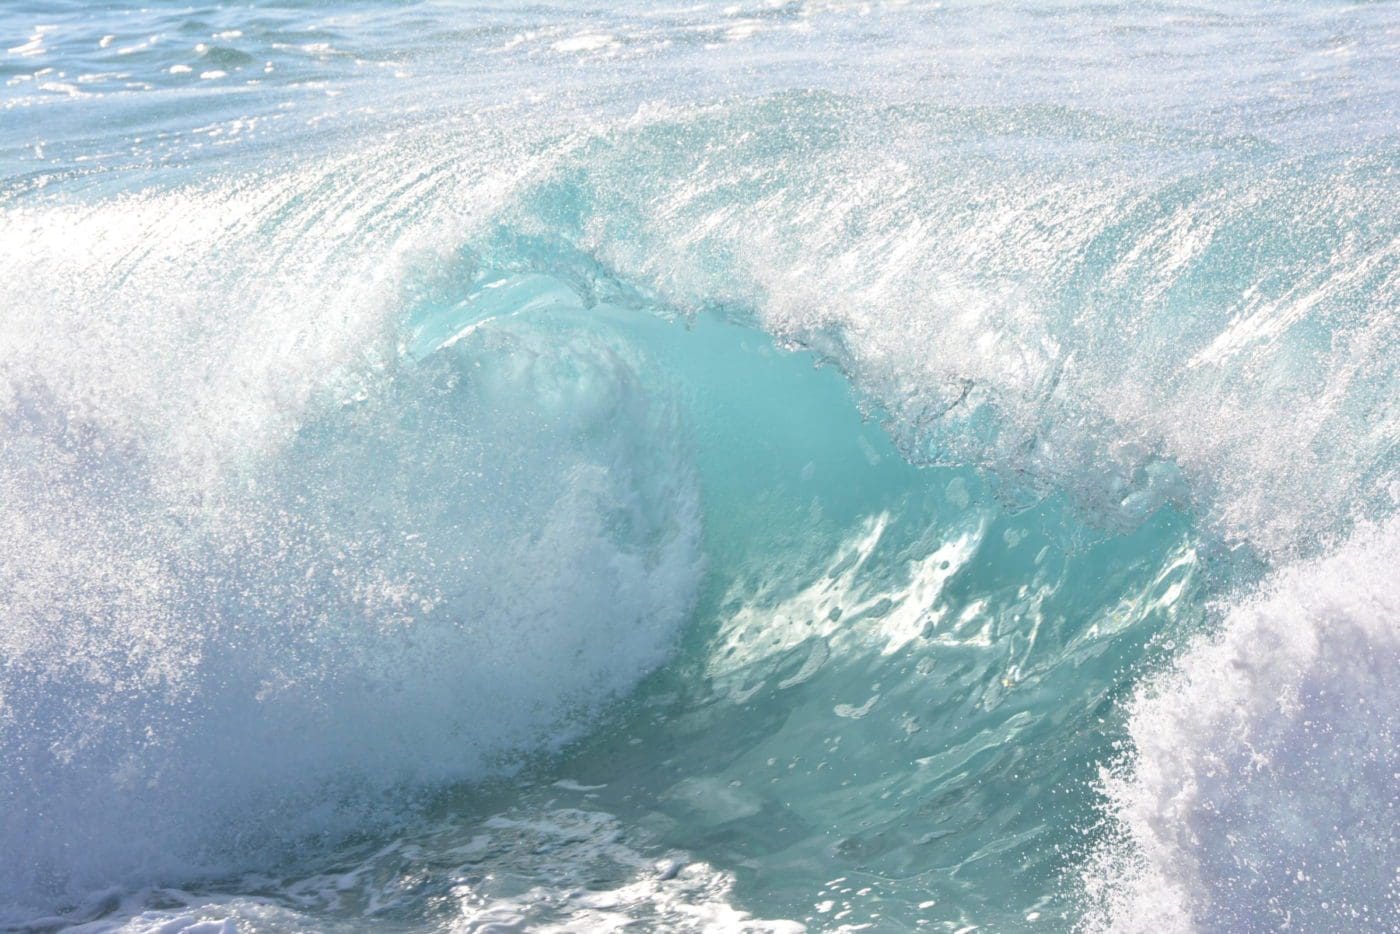 Close up of a crashing wave.